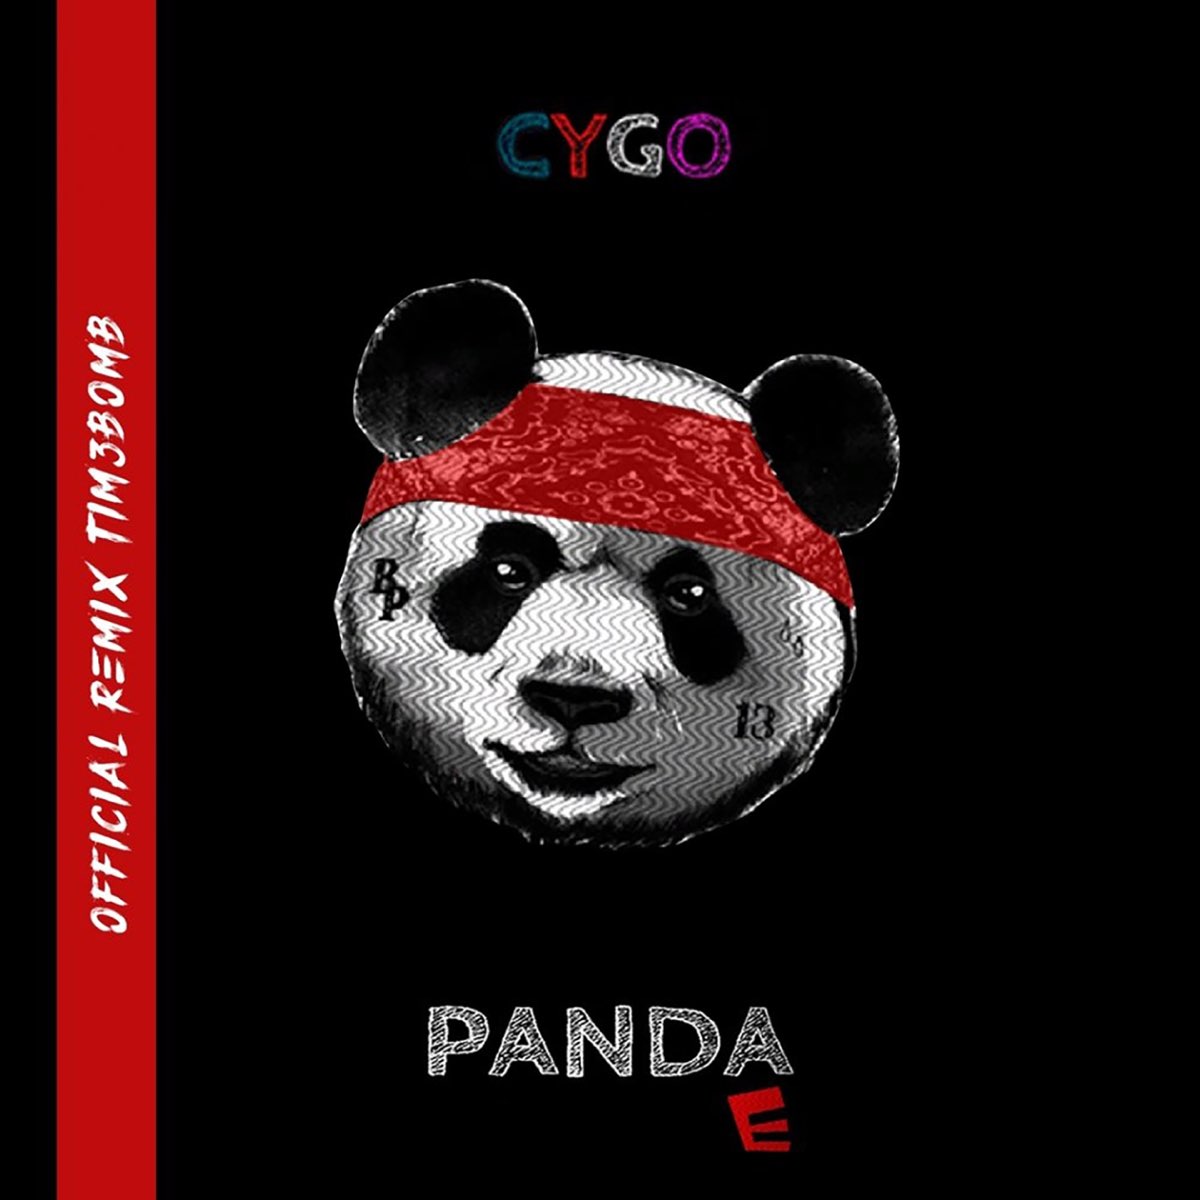 CYGO Panda. Panda CYGO обложка. Панда е. Сайго – Панда е.